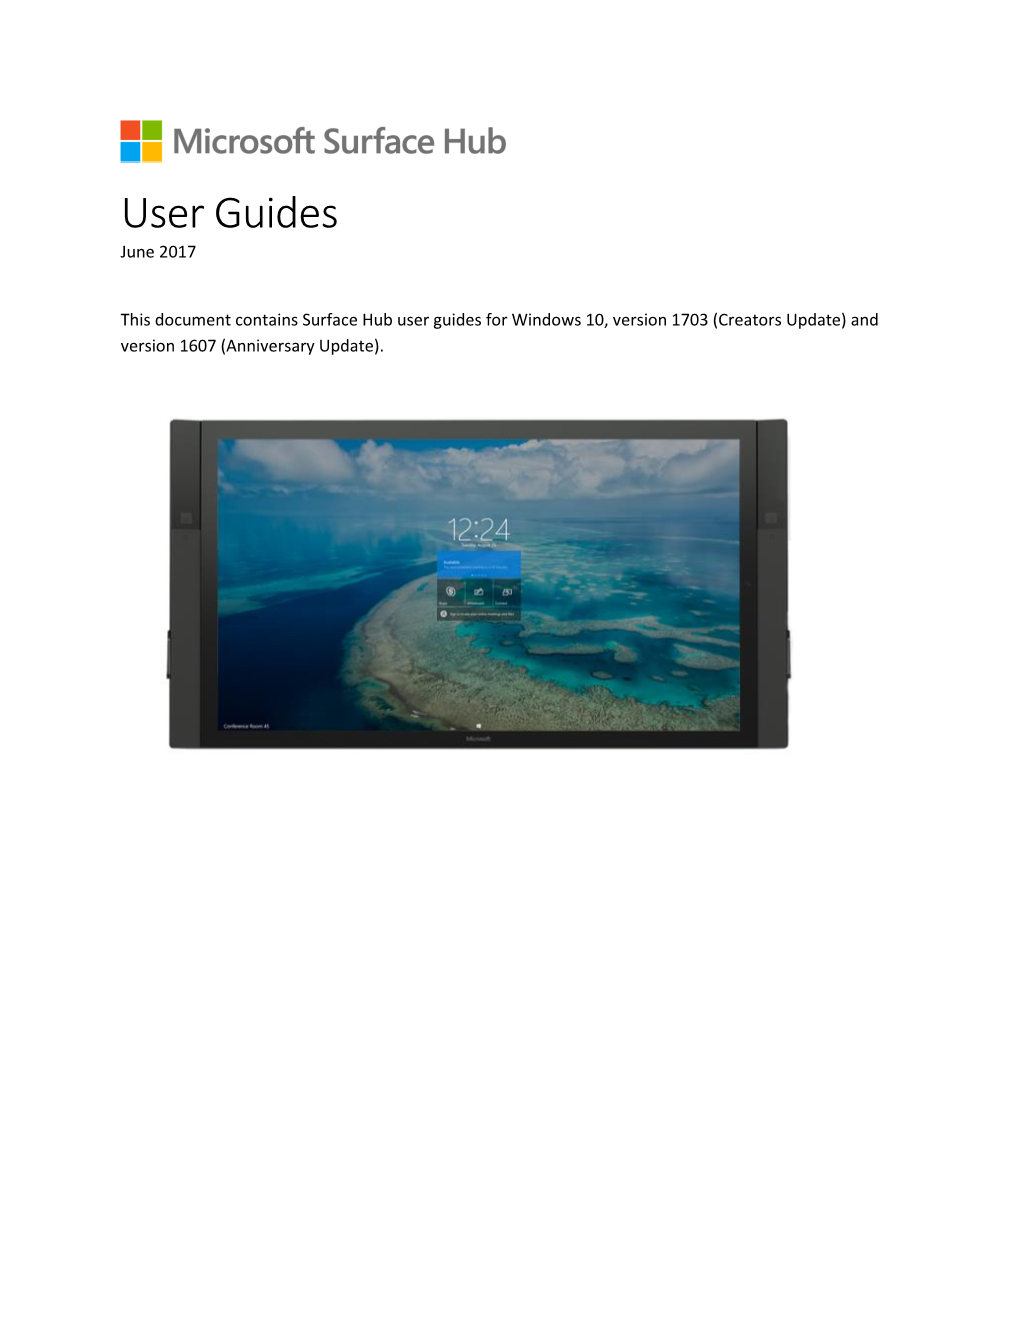 Microsoft Surface Hub-User Guides 3.0 MB